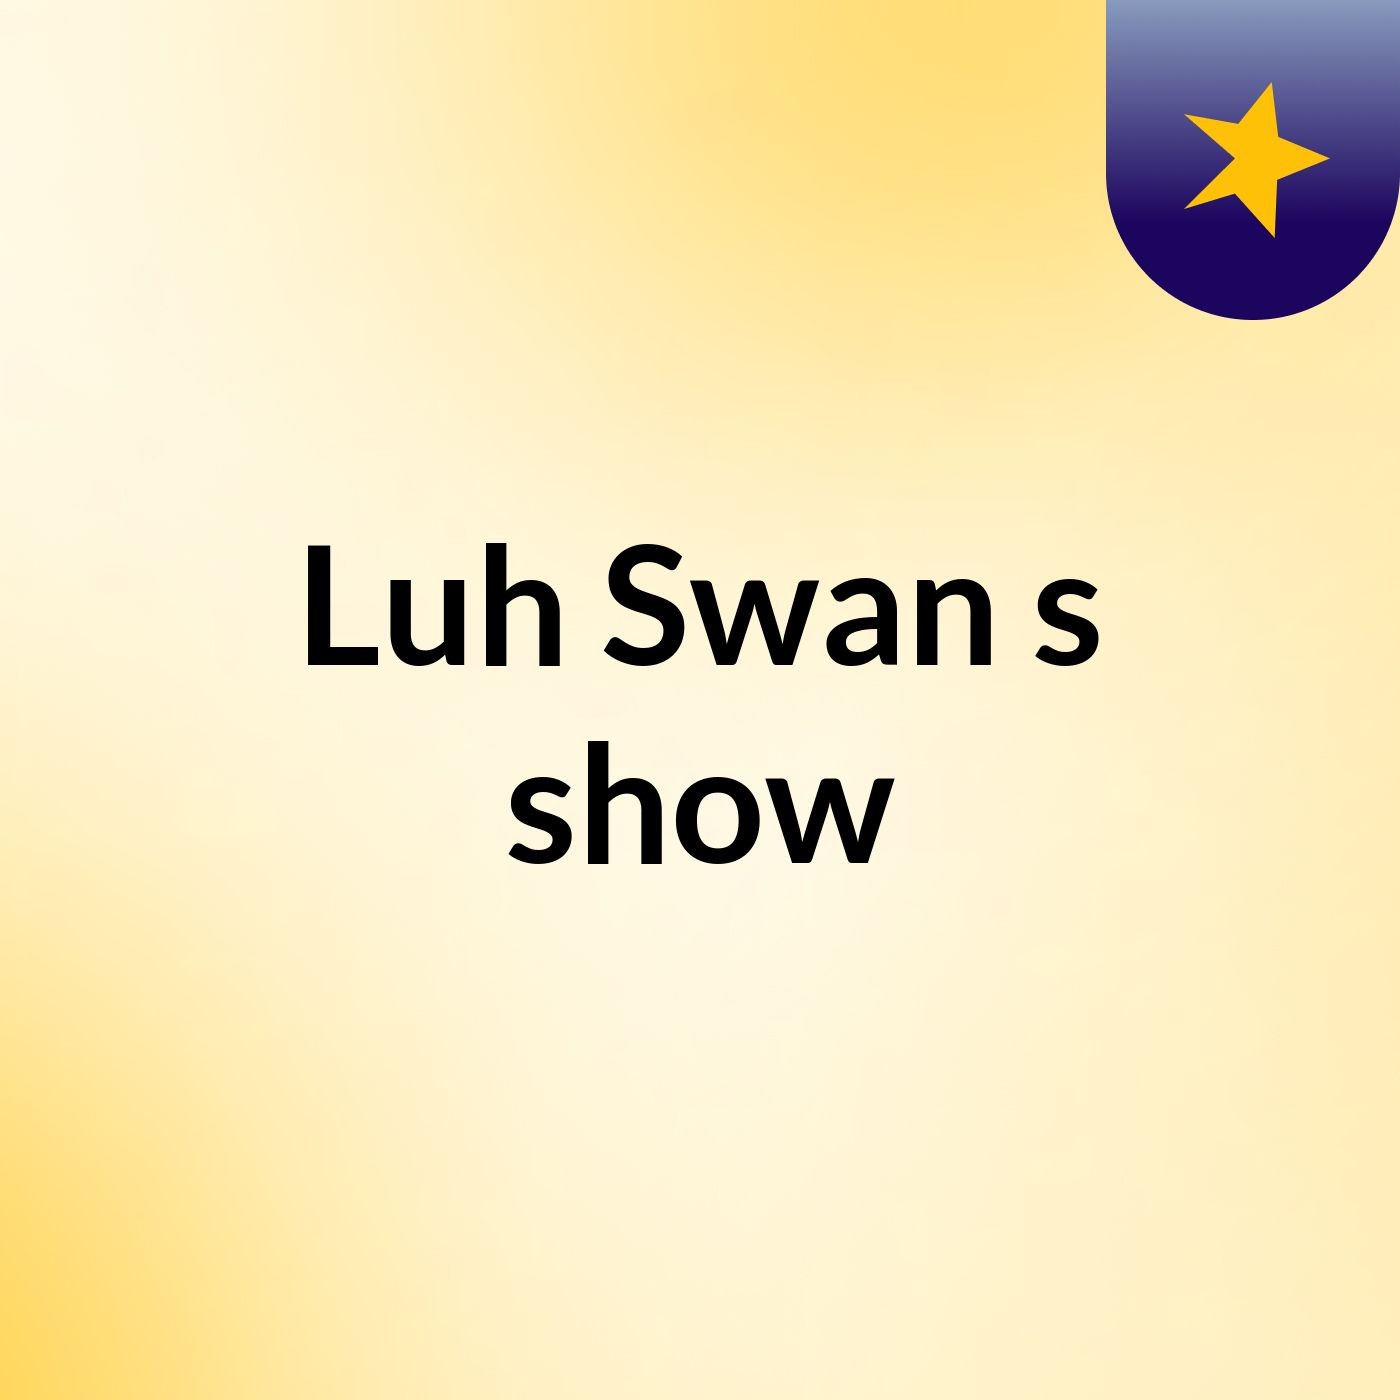 Luh Swan's show